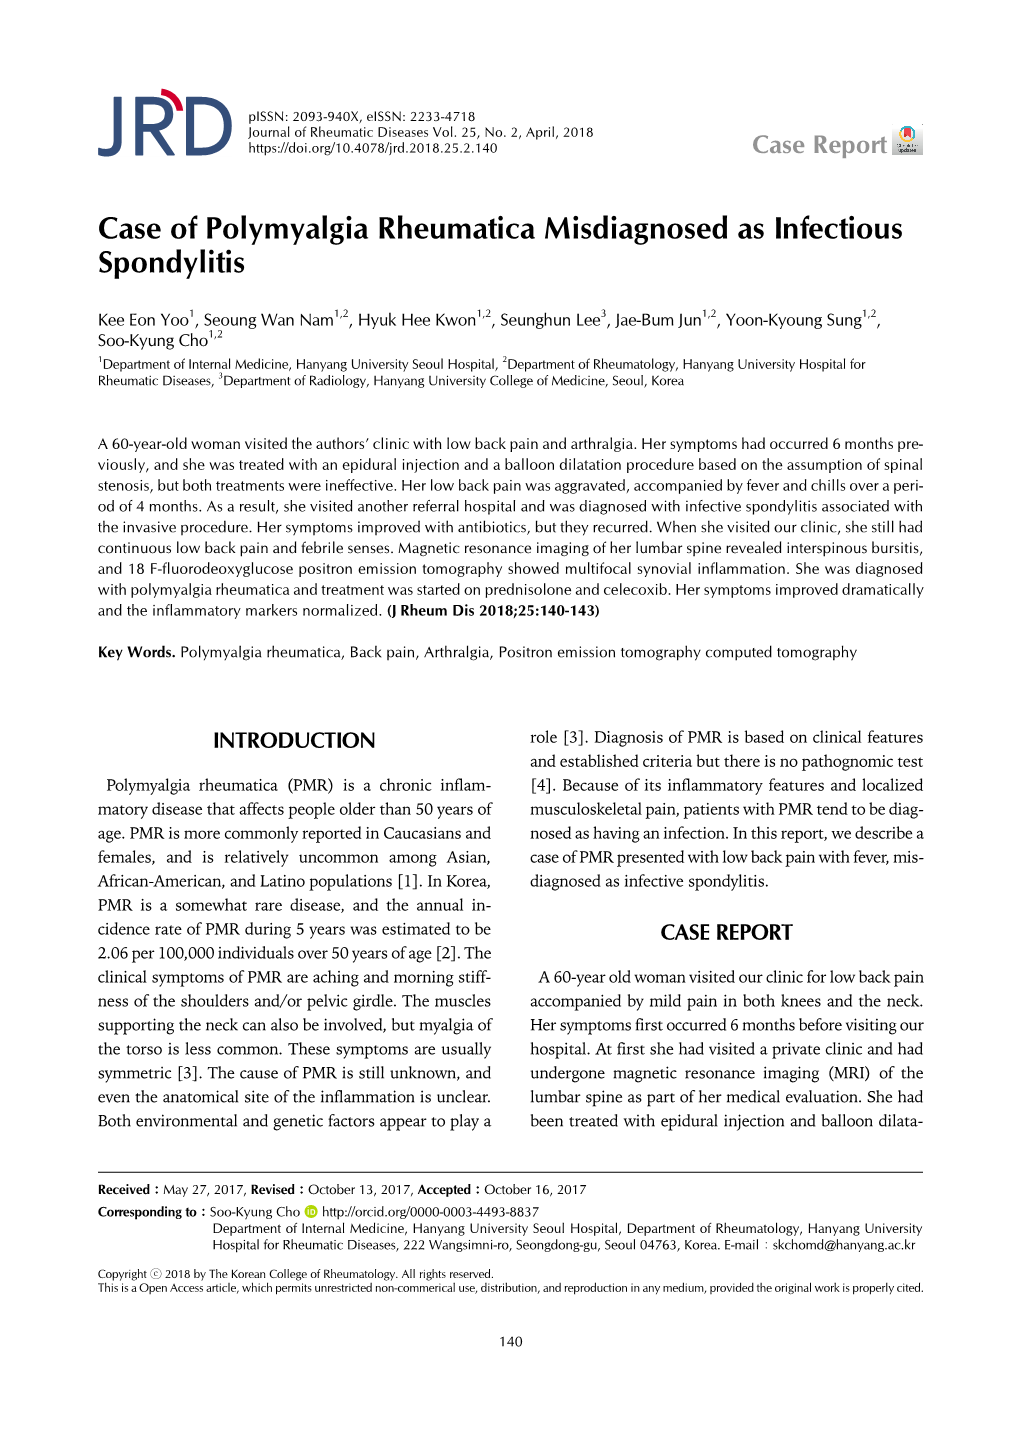 Case of Polymyalgia Rheumatica Misdiagnosed As Infectious Spondylitis